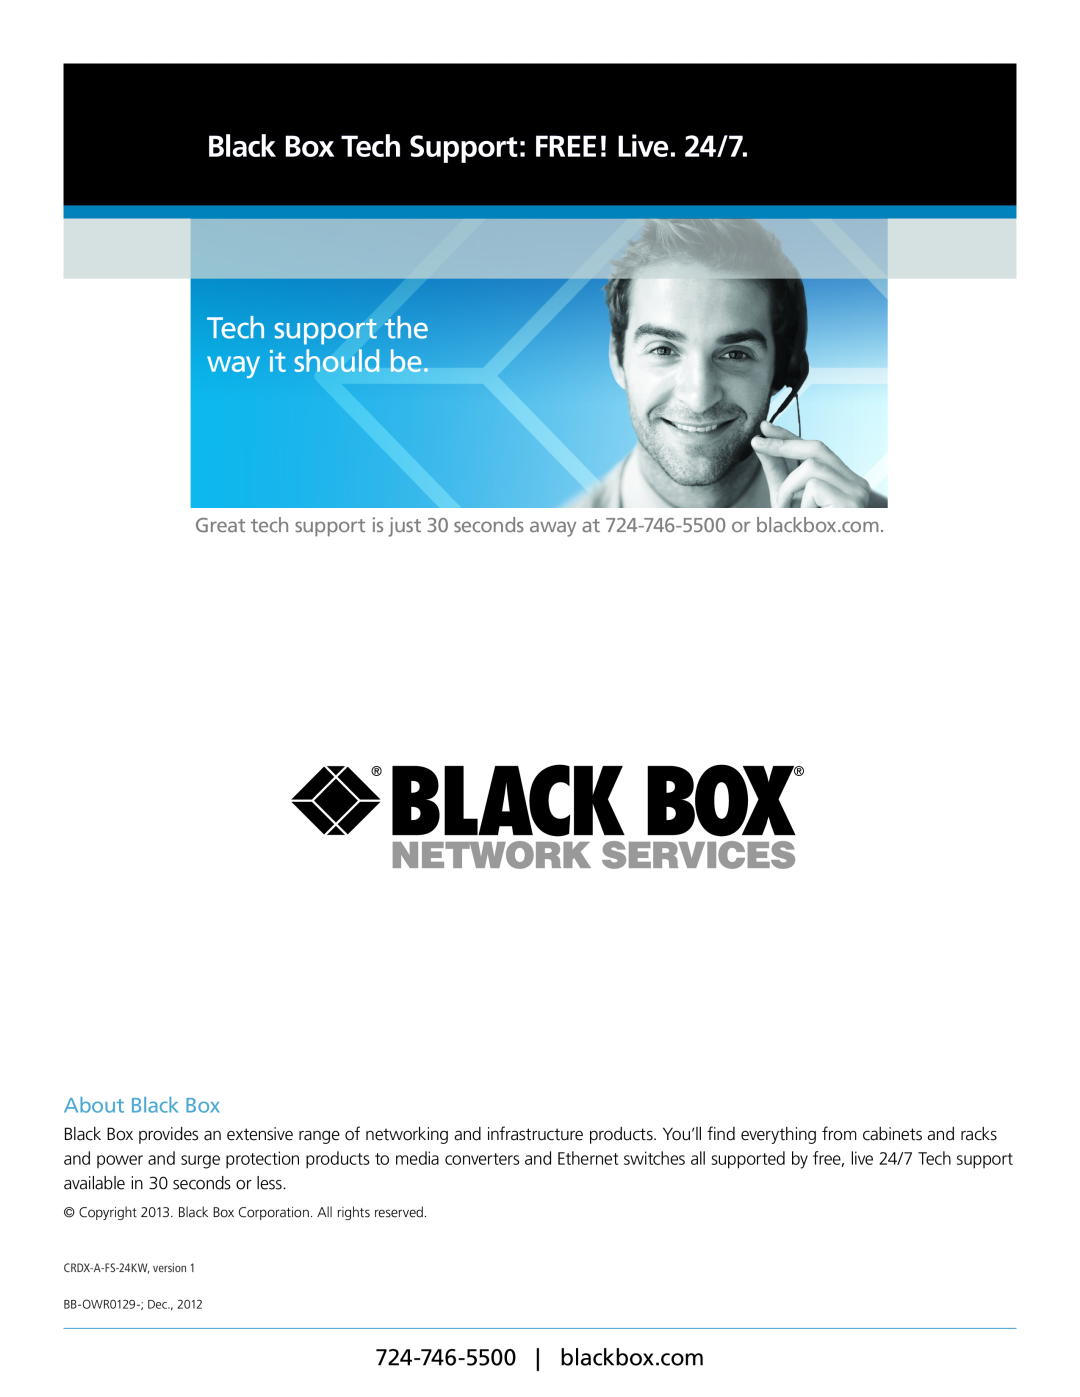 Black Box Black Box Cold Row DX, CRDX-W-FS-12KW Black Box Tech Support FREE! Live. 24/7, Tech support the way it should be 